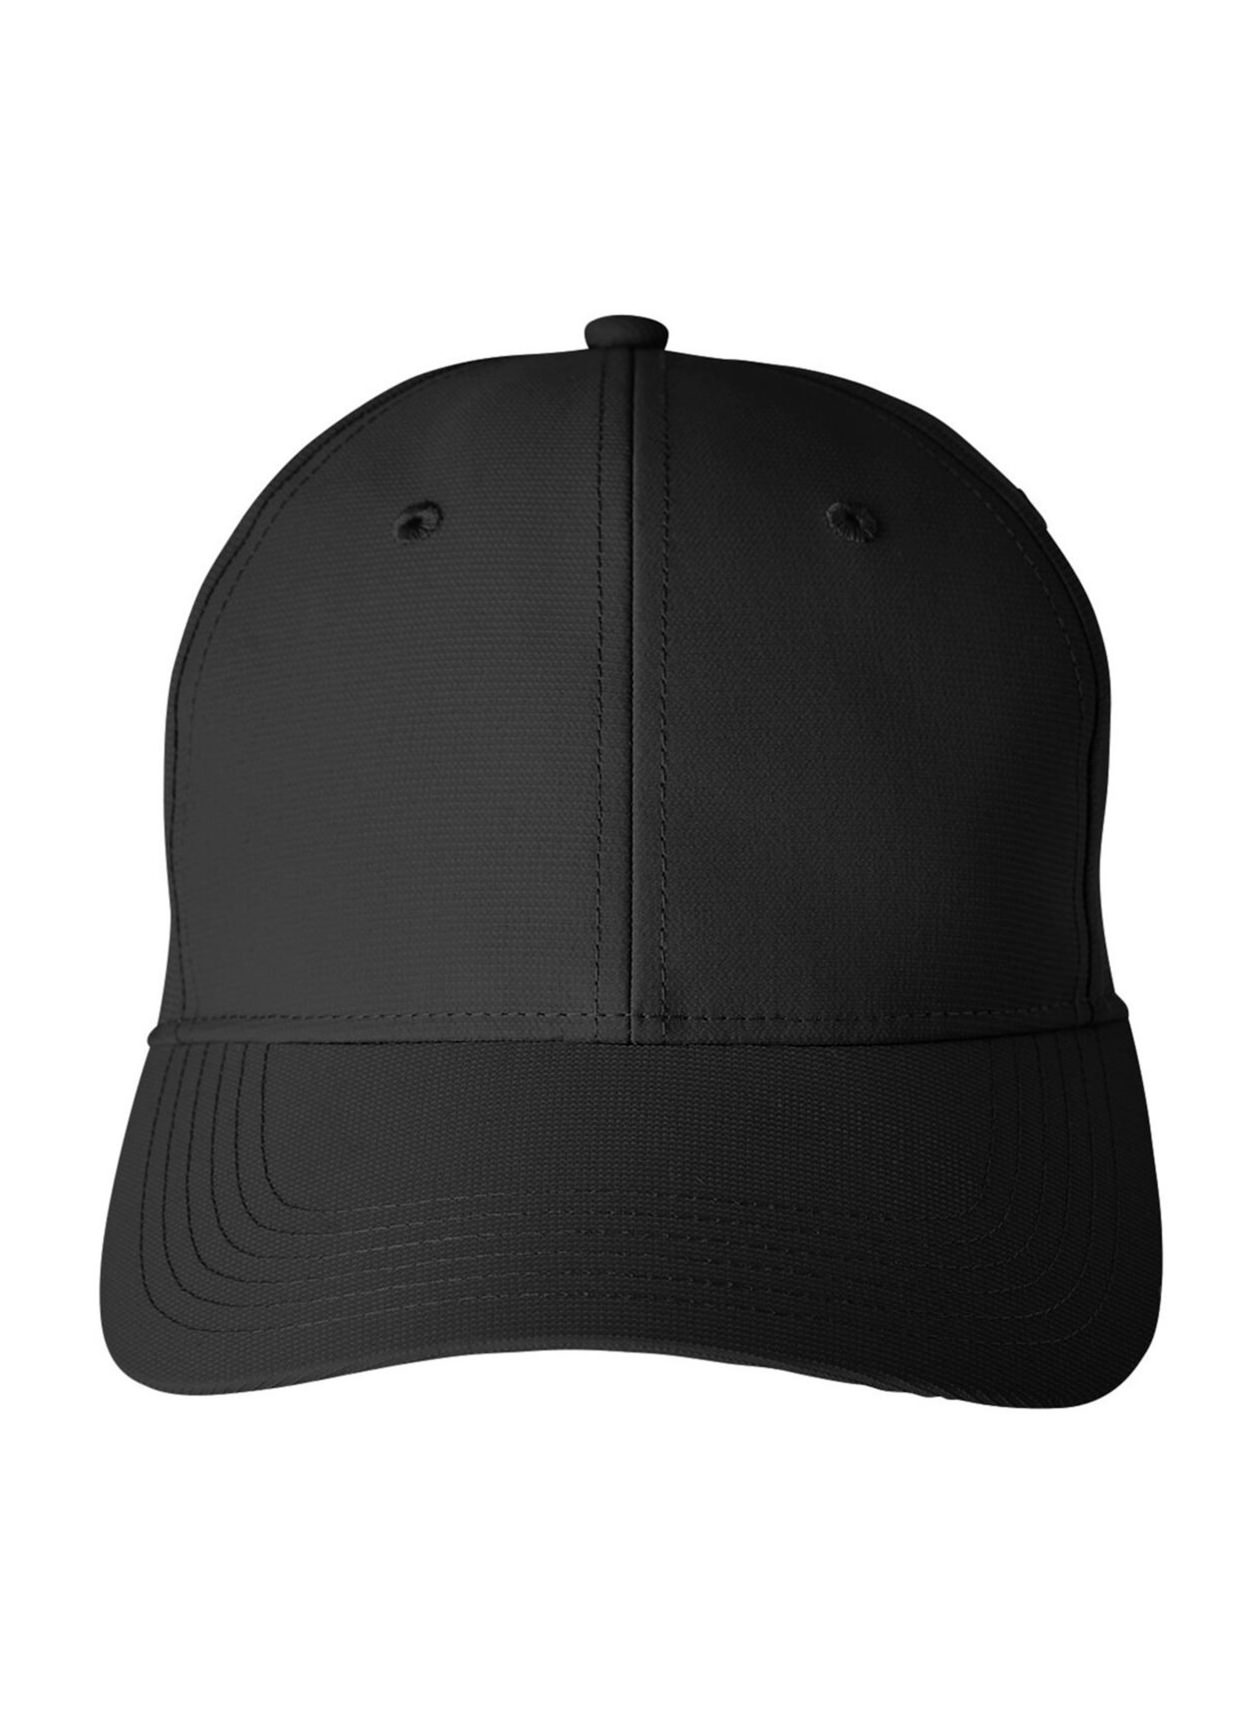 PUMA Black Pounce Adjustable Hat